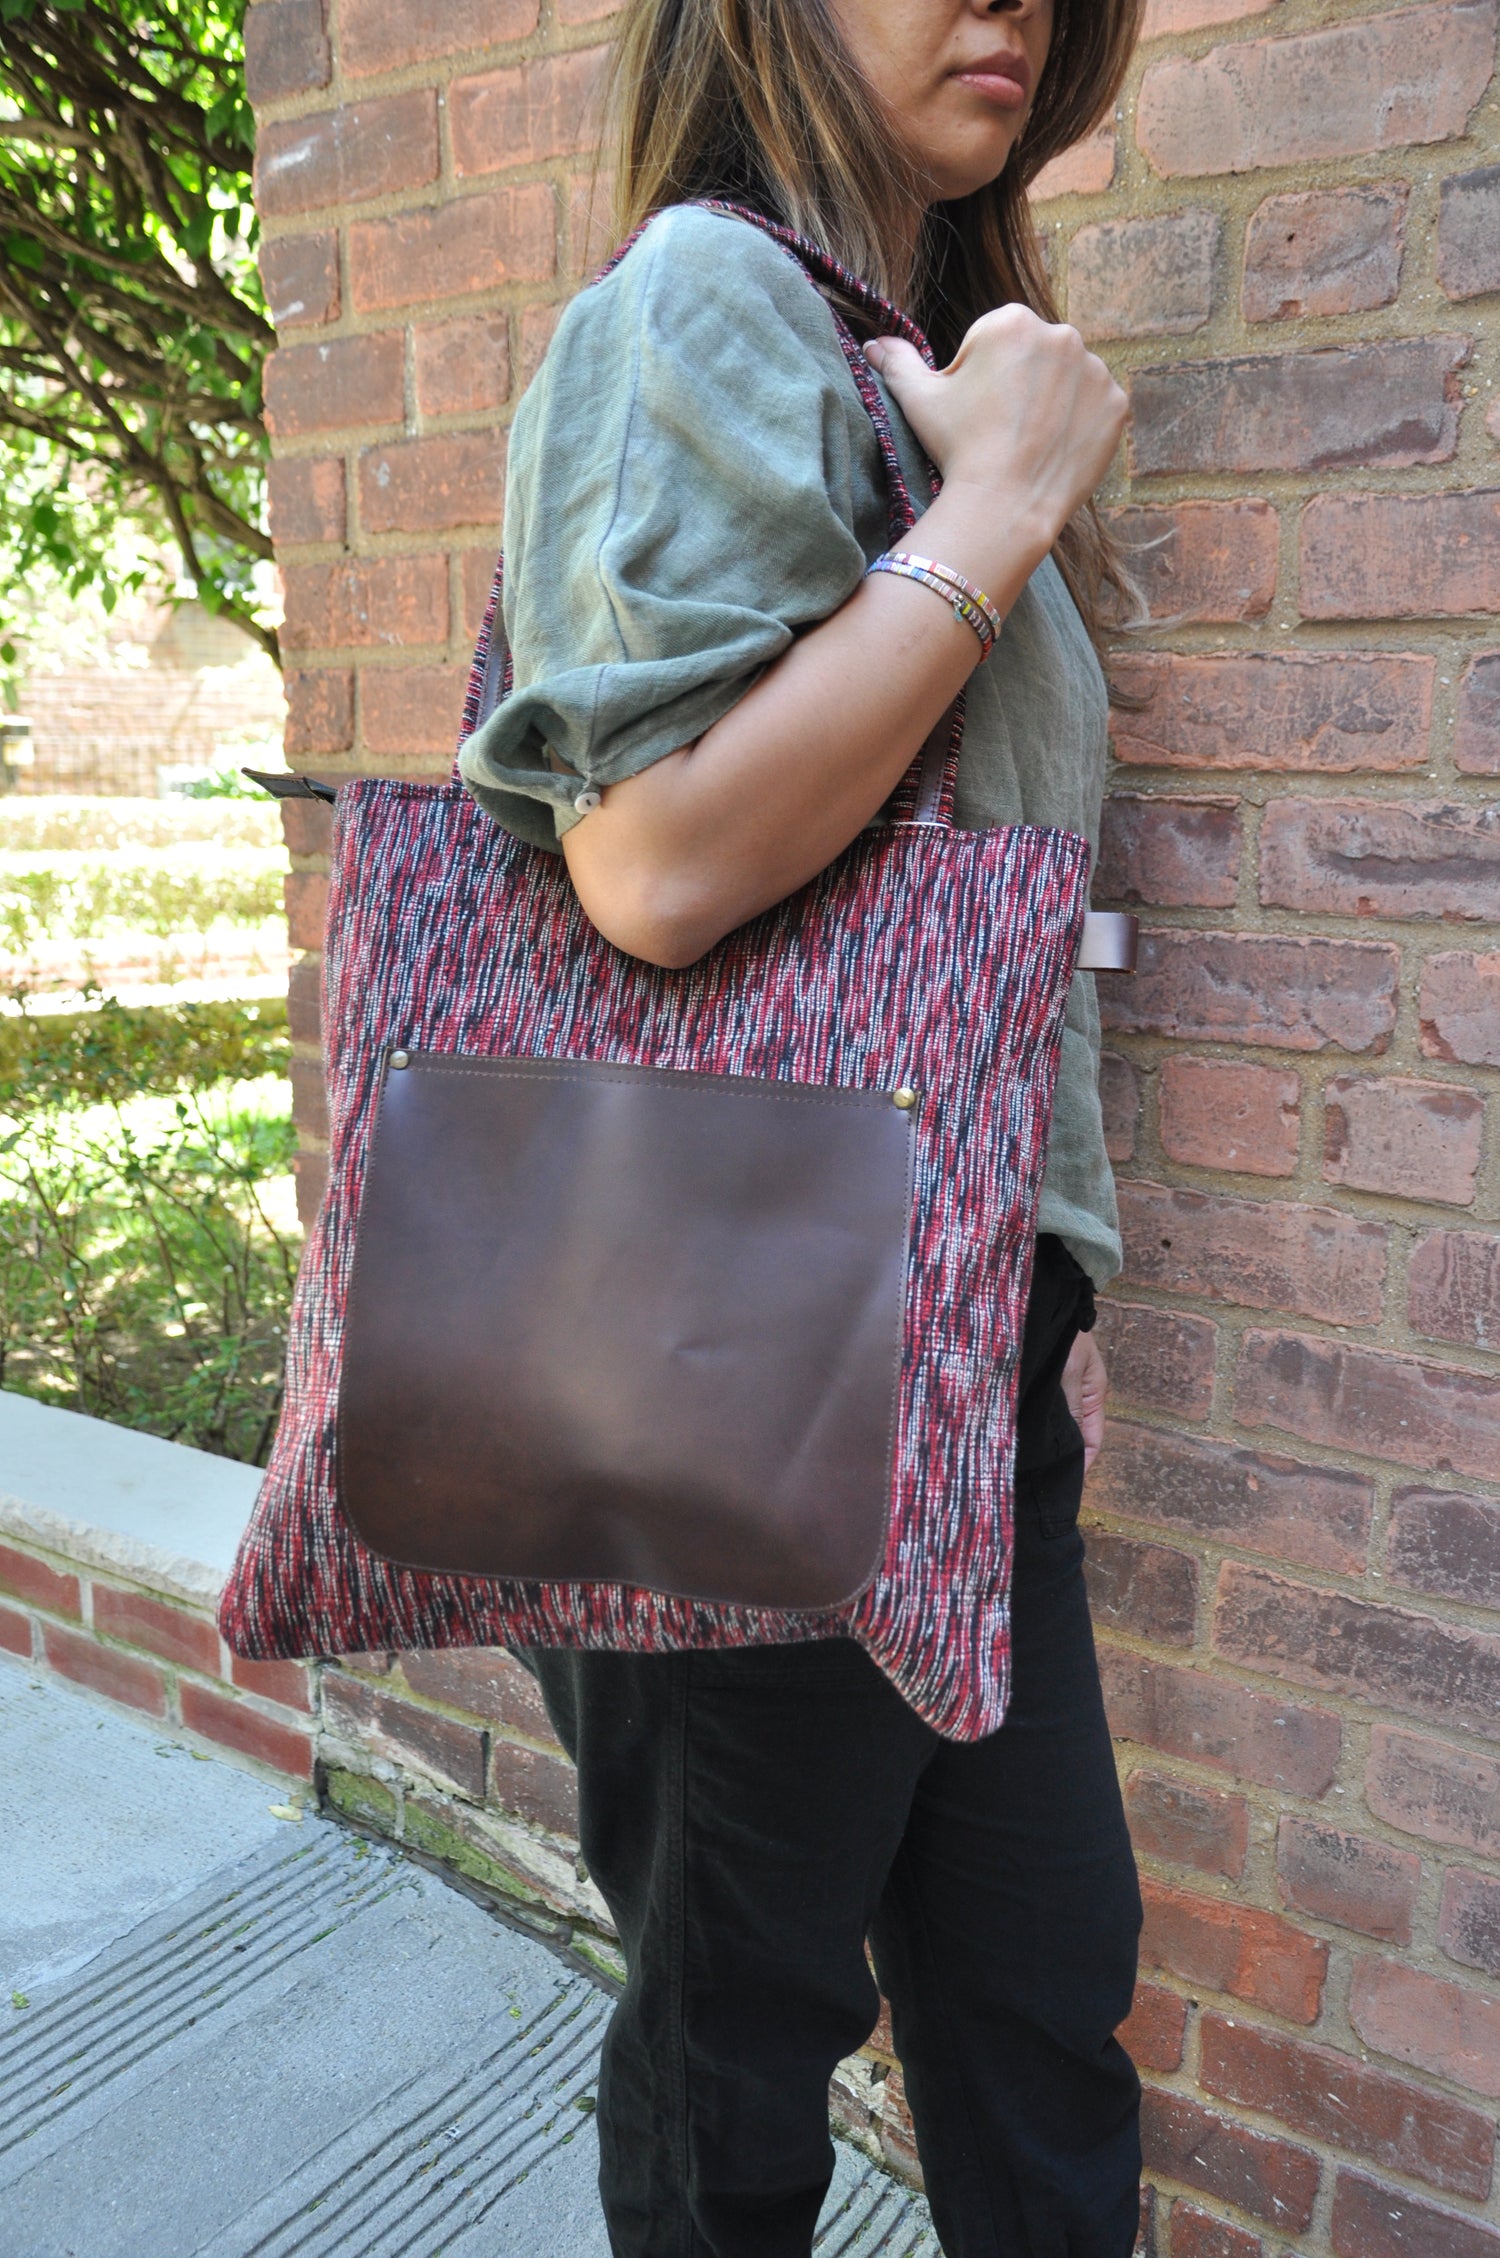 Zumki Elevate Your Style with Handcrafted Artisanal Bags – Zumki NYC